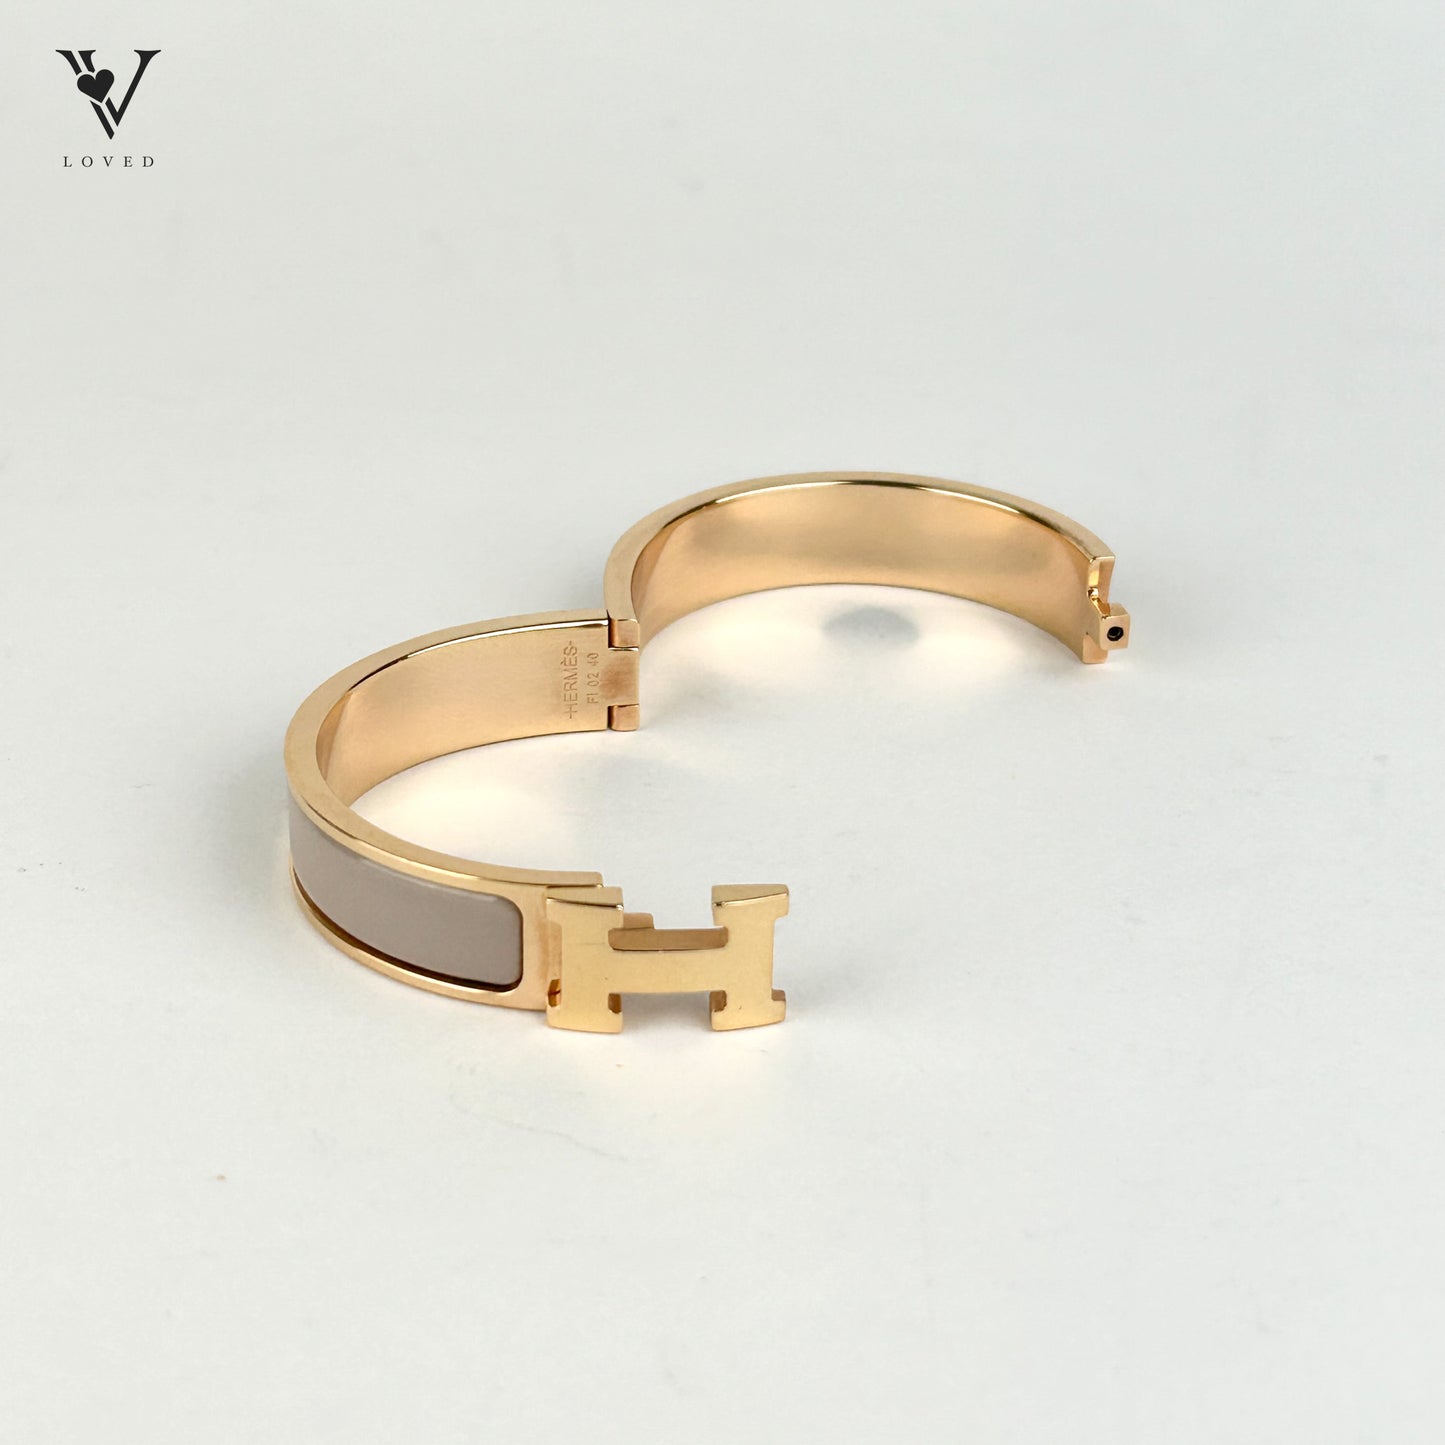 Clic Clac H Bracelet Marron Glace in Gold Bangle